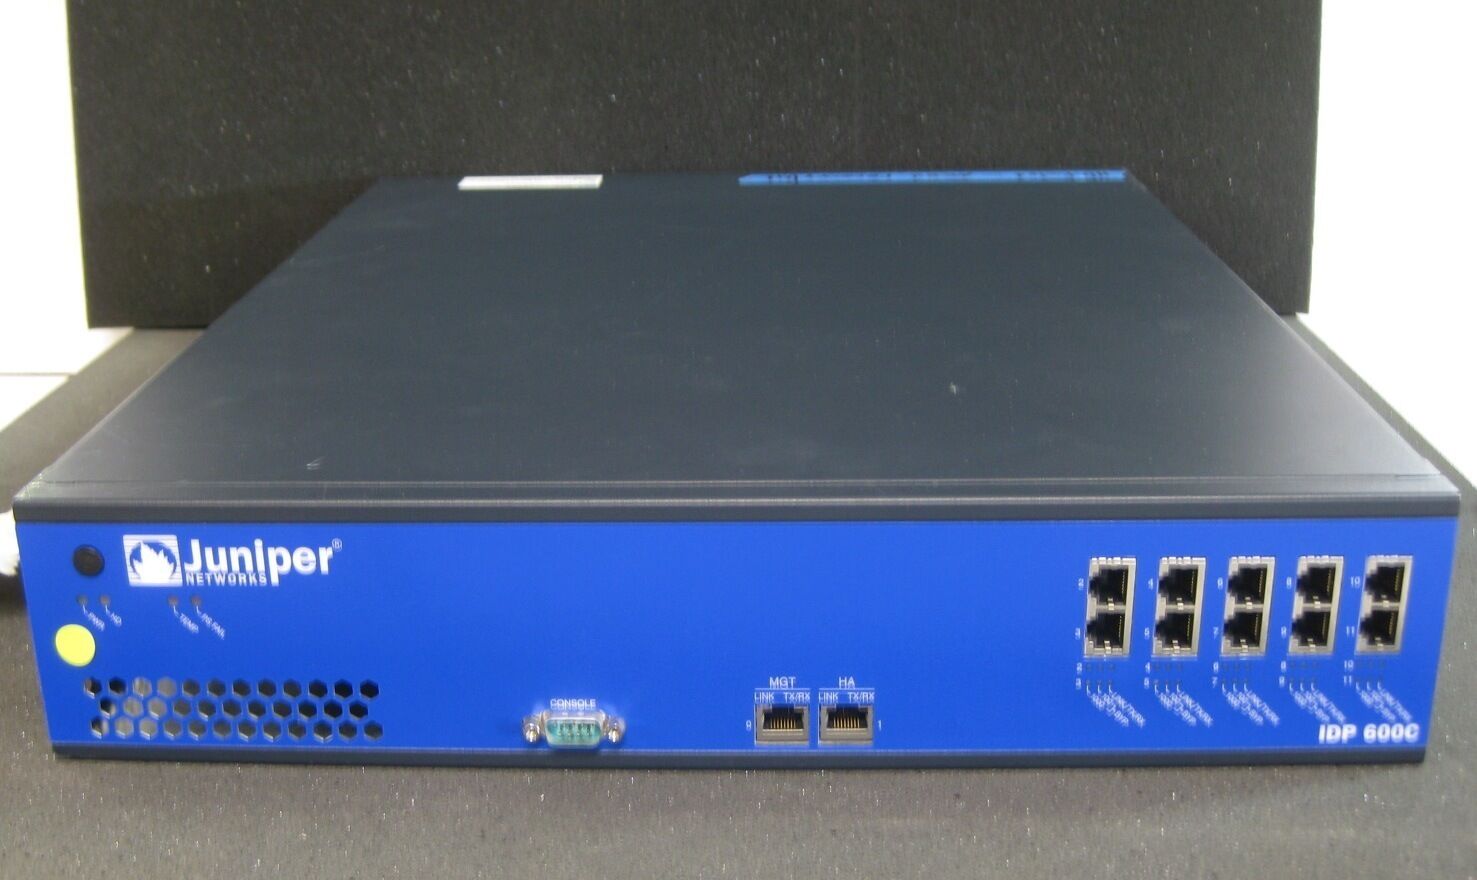 Juniper IDP-600C Intrusion Detection Security Appliance